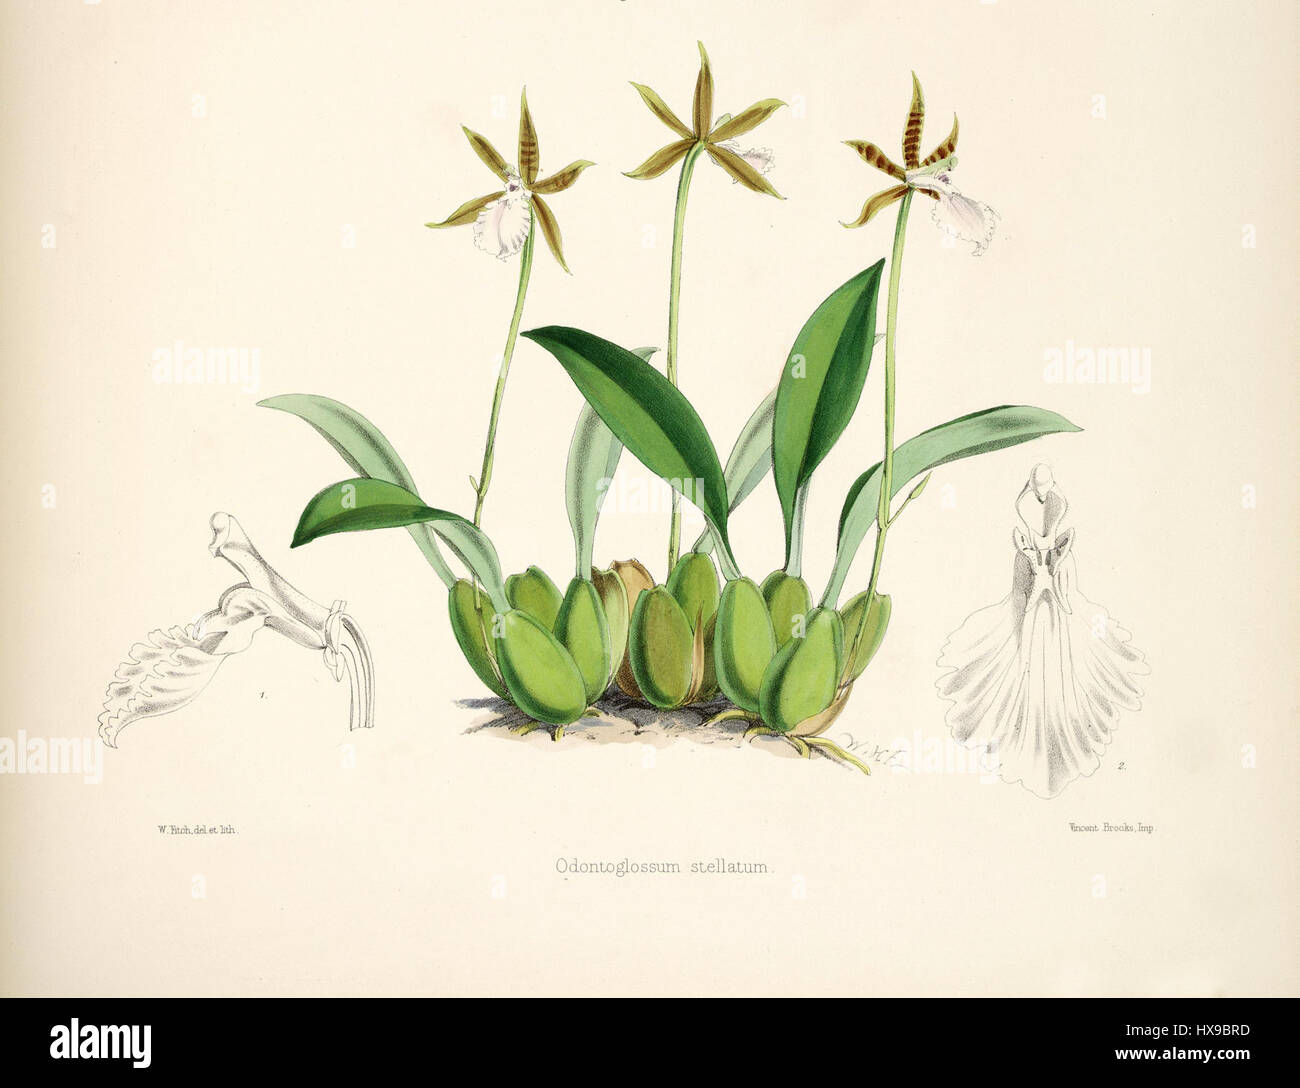 Rhynchostele stellata (as Odontoglossum stellatum)   pl. 13, lower fig.   Bateman, Monogr.Odont Stock Photo